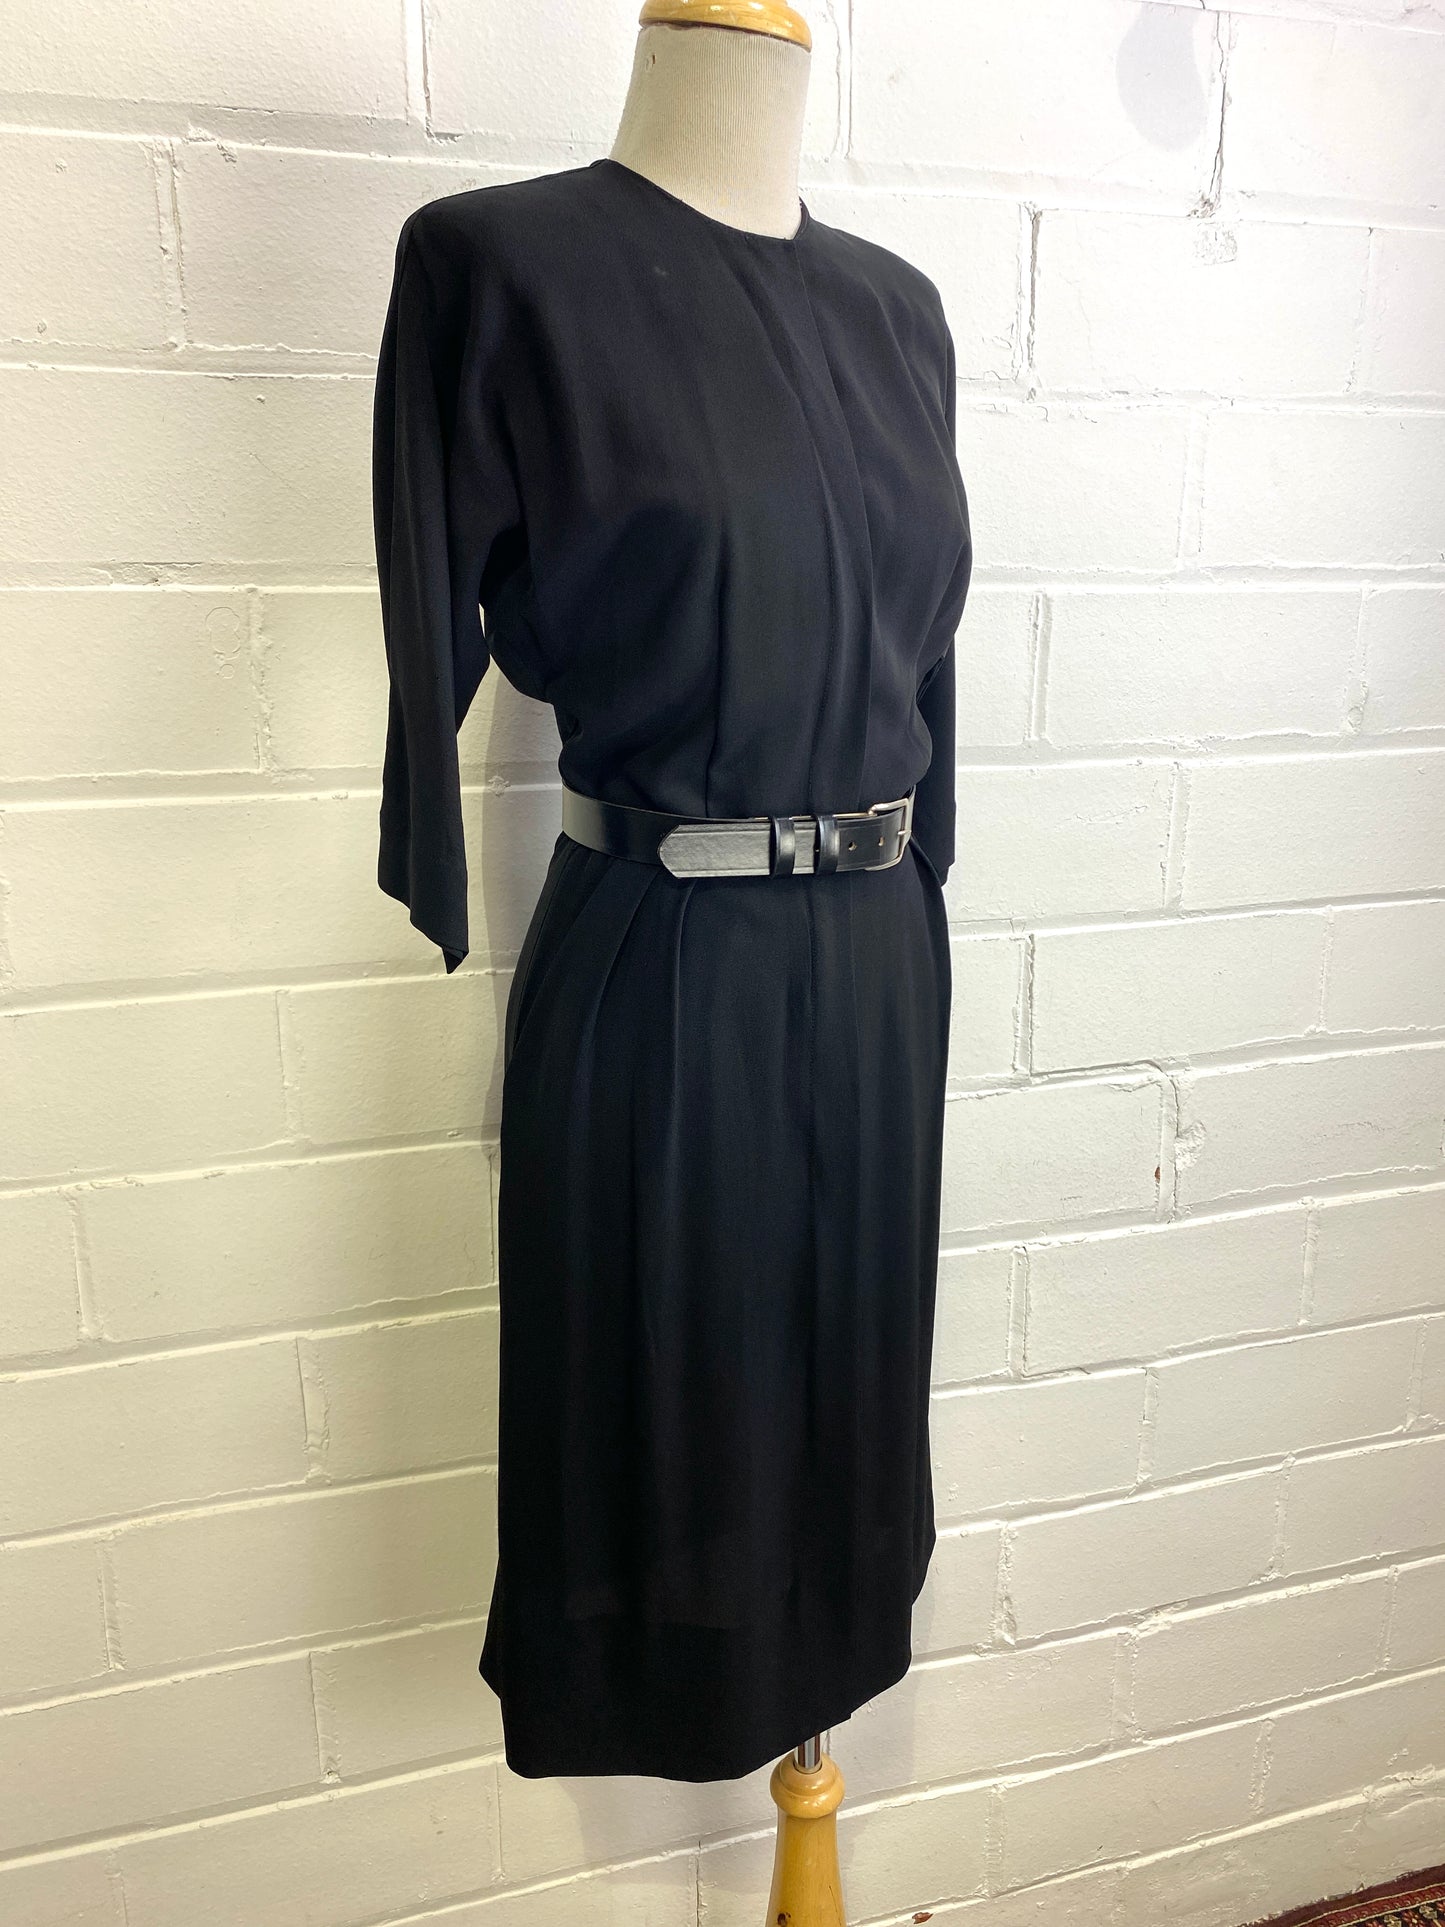 Vintage 1950s Minimalist Black Zip Day Dress, Small 